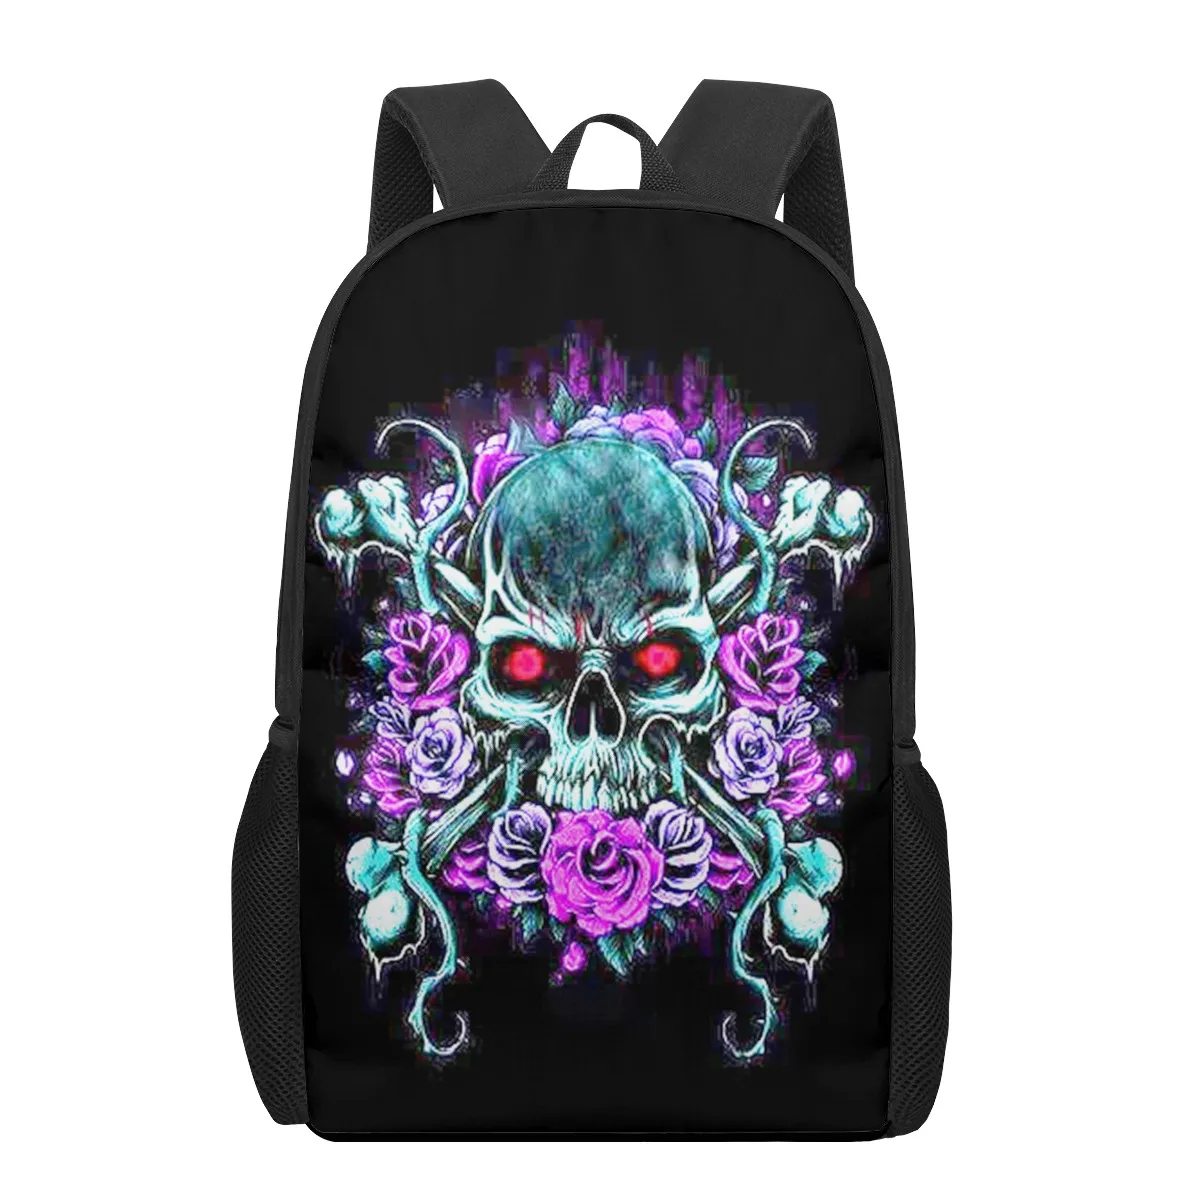 Creative skull Print 16-inch teen school bag boys girls kids school backpack student school bag school bag